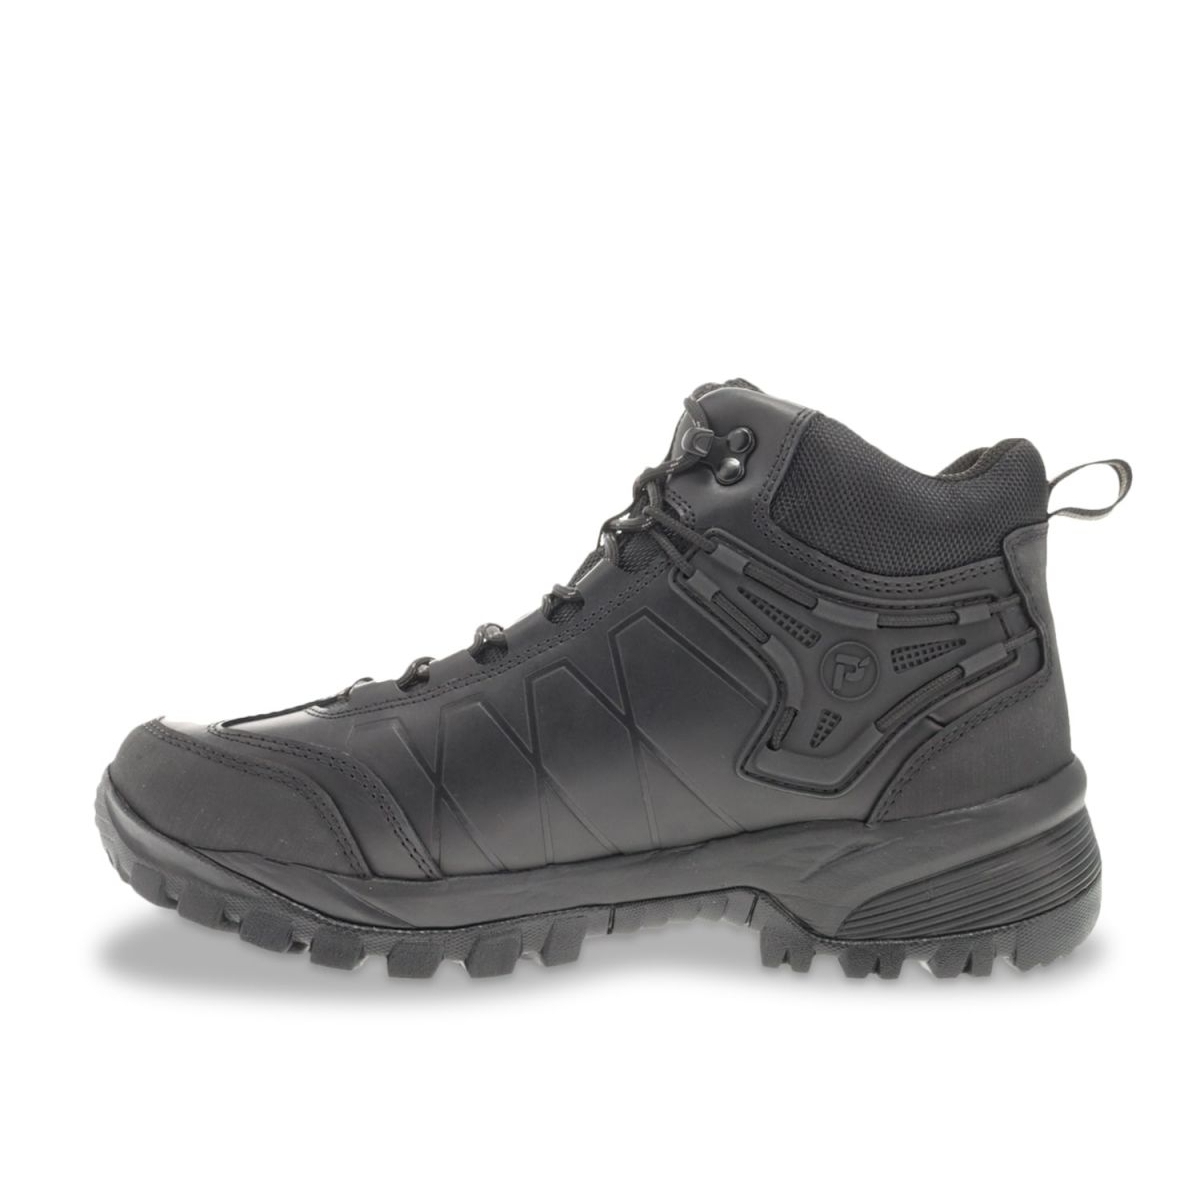 Propet Men's Ridge Walker Force Hiking Boots Black - MBA052LBLK BLACK - BLACK, 16 XX-Wide